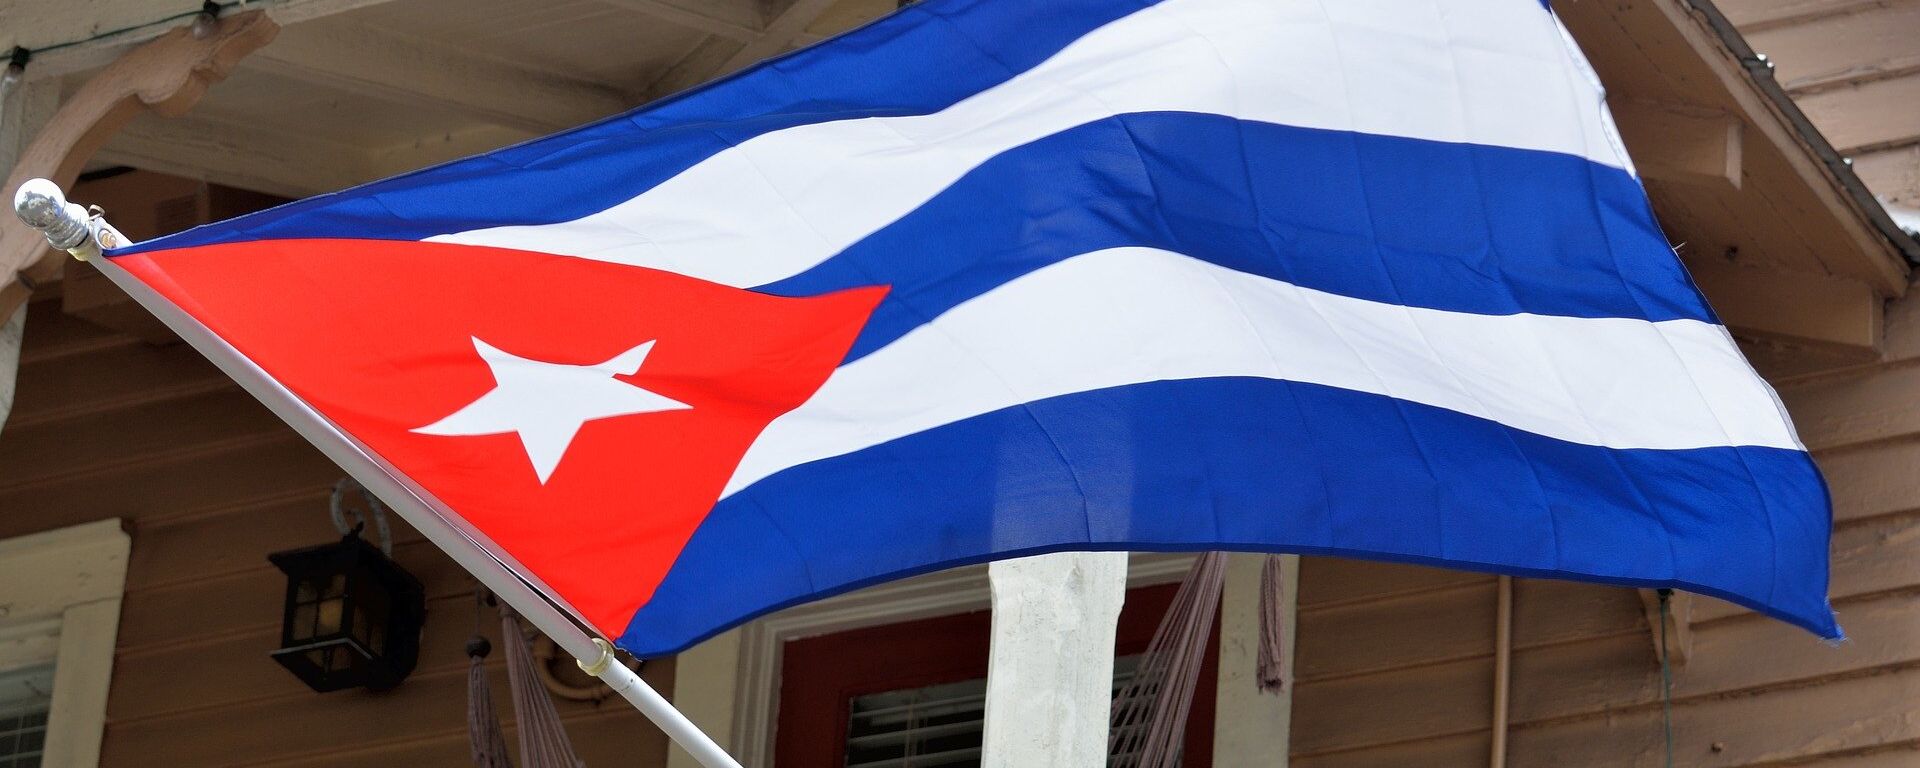 La bandera de Cuba - Sputnik Mundo, 1920, 12.01.2021